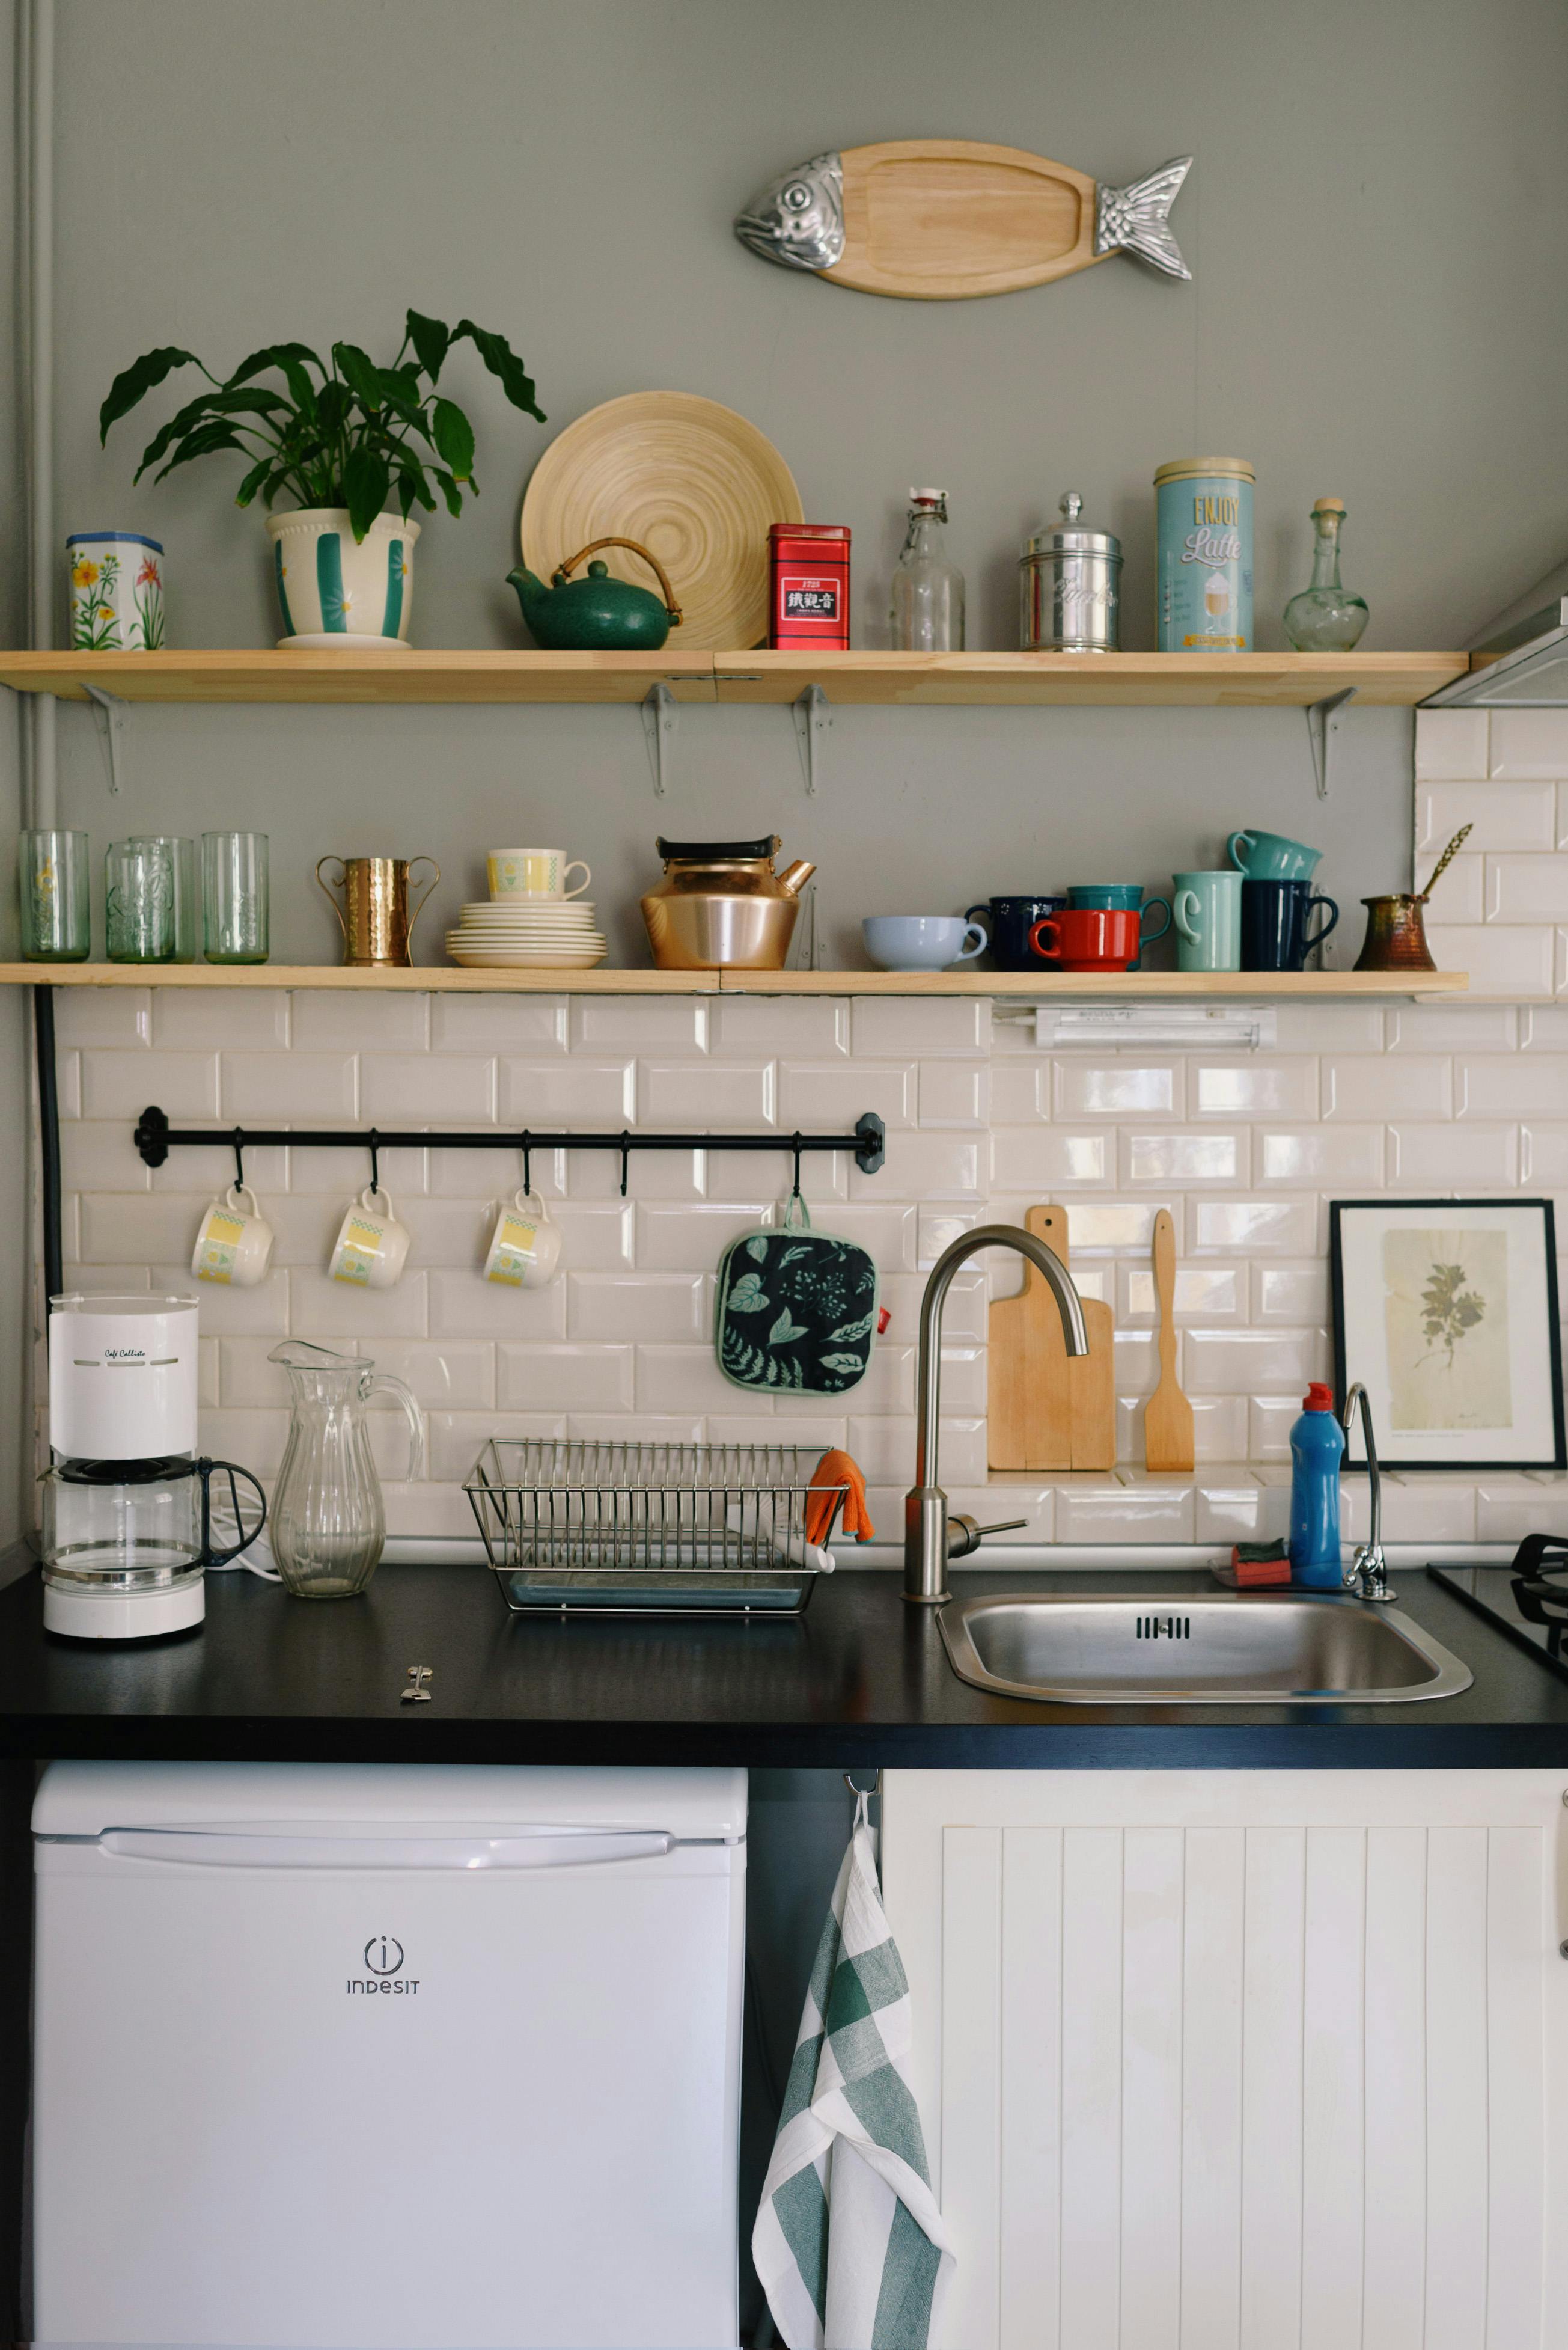 Modern kitchen interior with sink and kitchenware on shelves \u00b7 Free ...